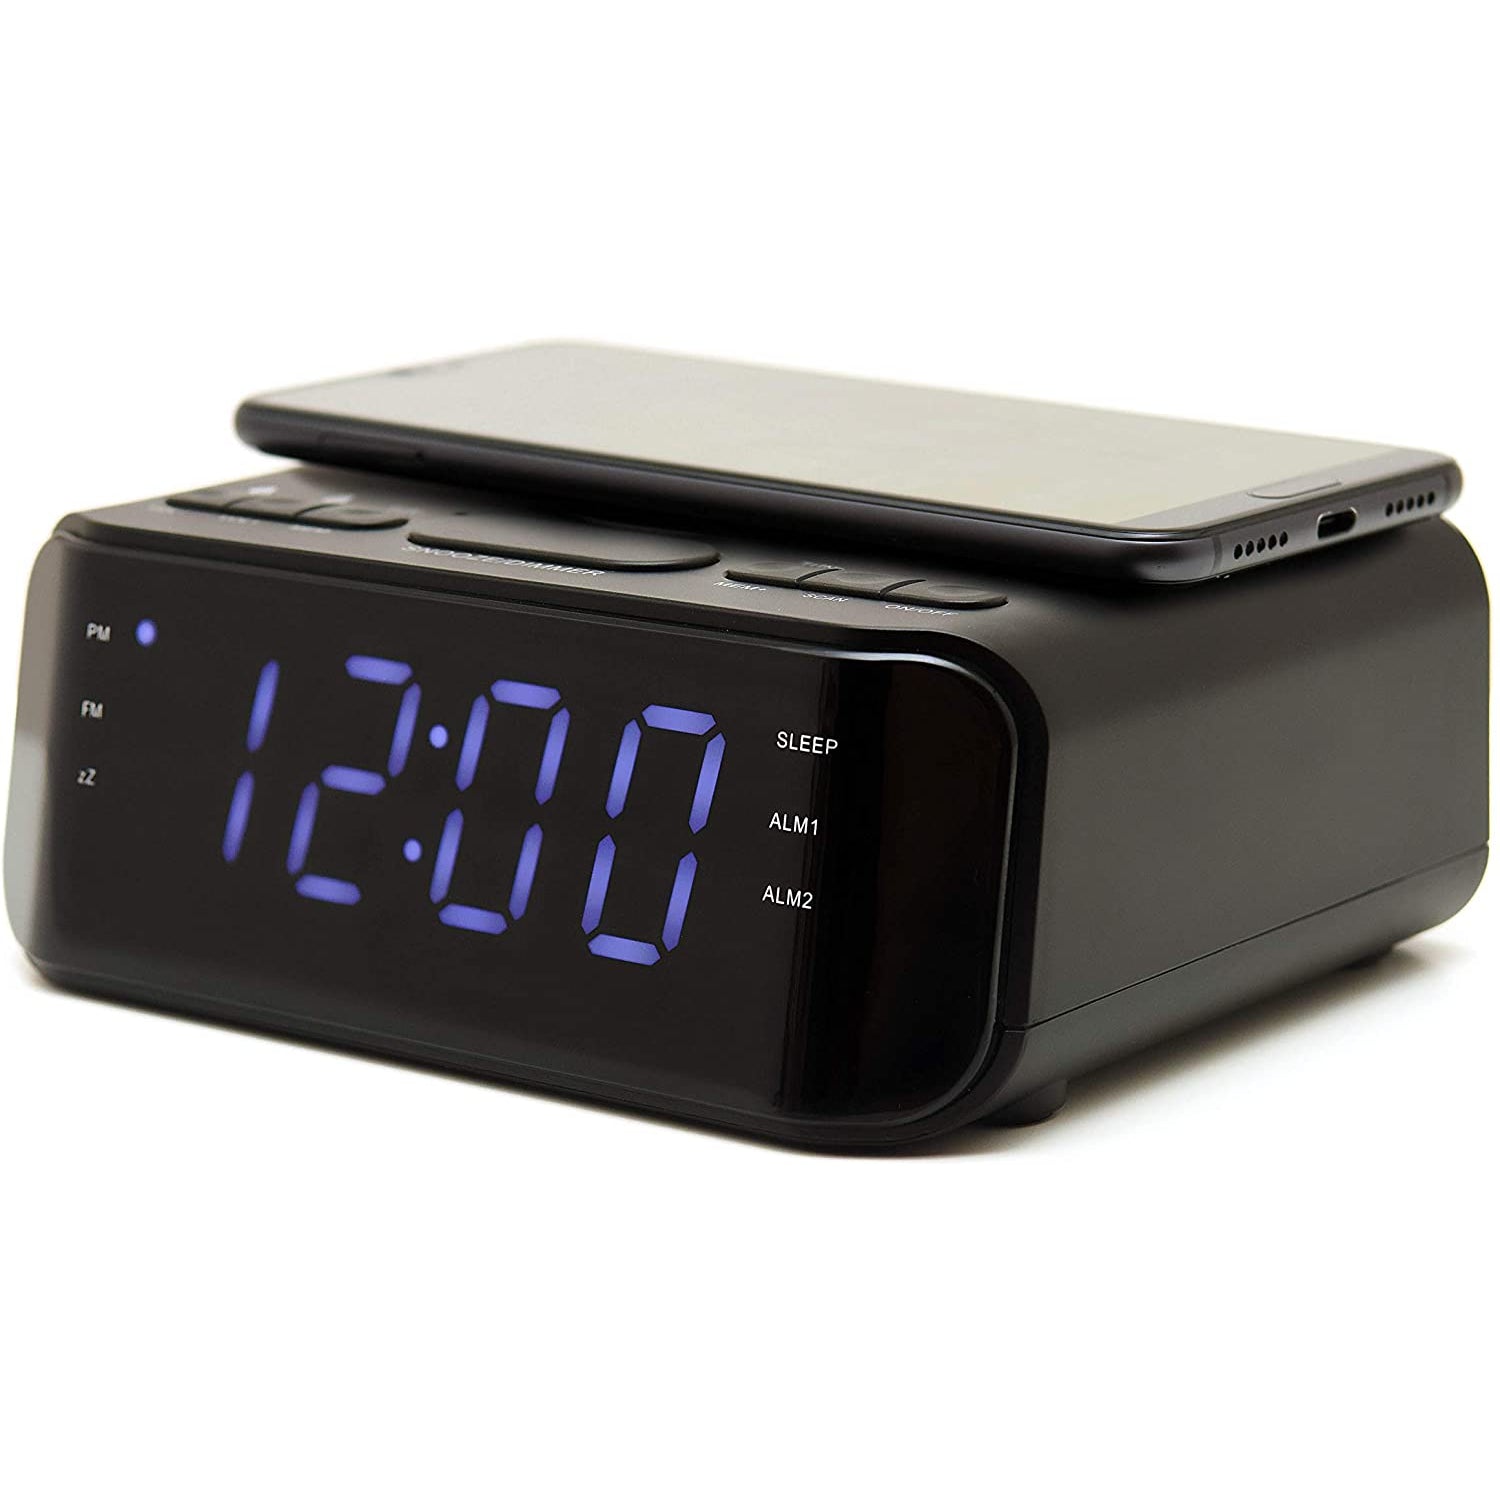 Groov-e GVWC06BK Atlas Alarm Clock Radio with Wireless Charging Pad - Black